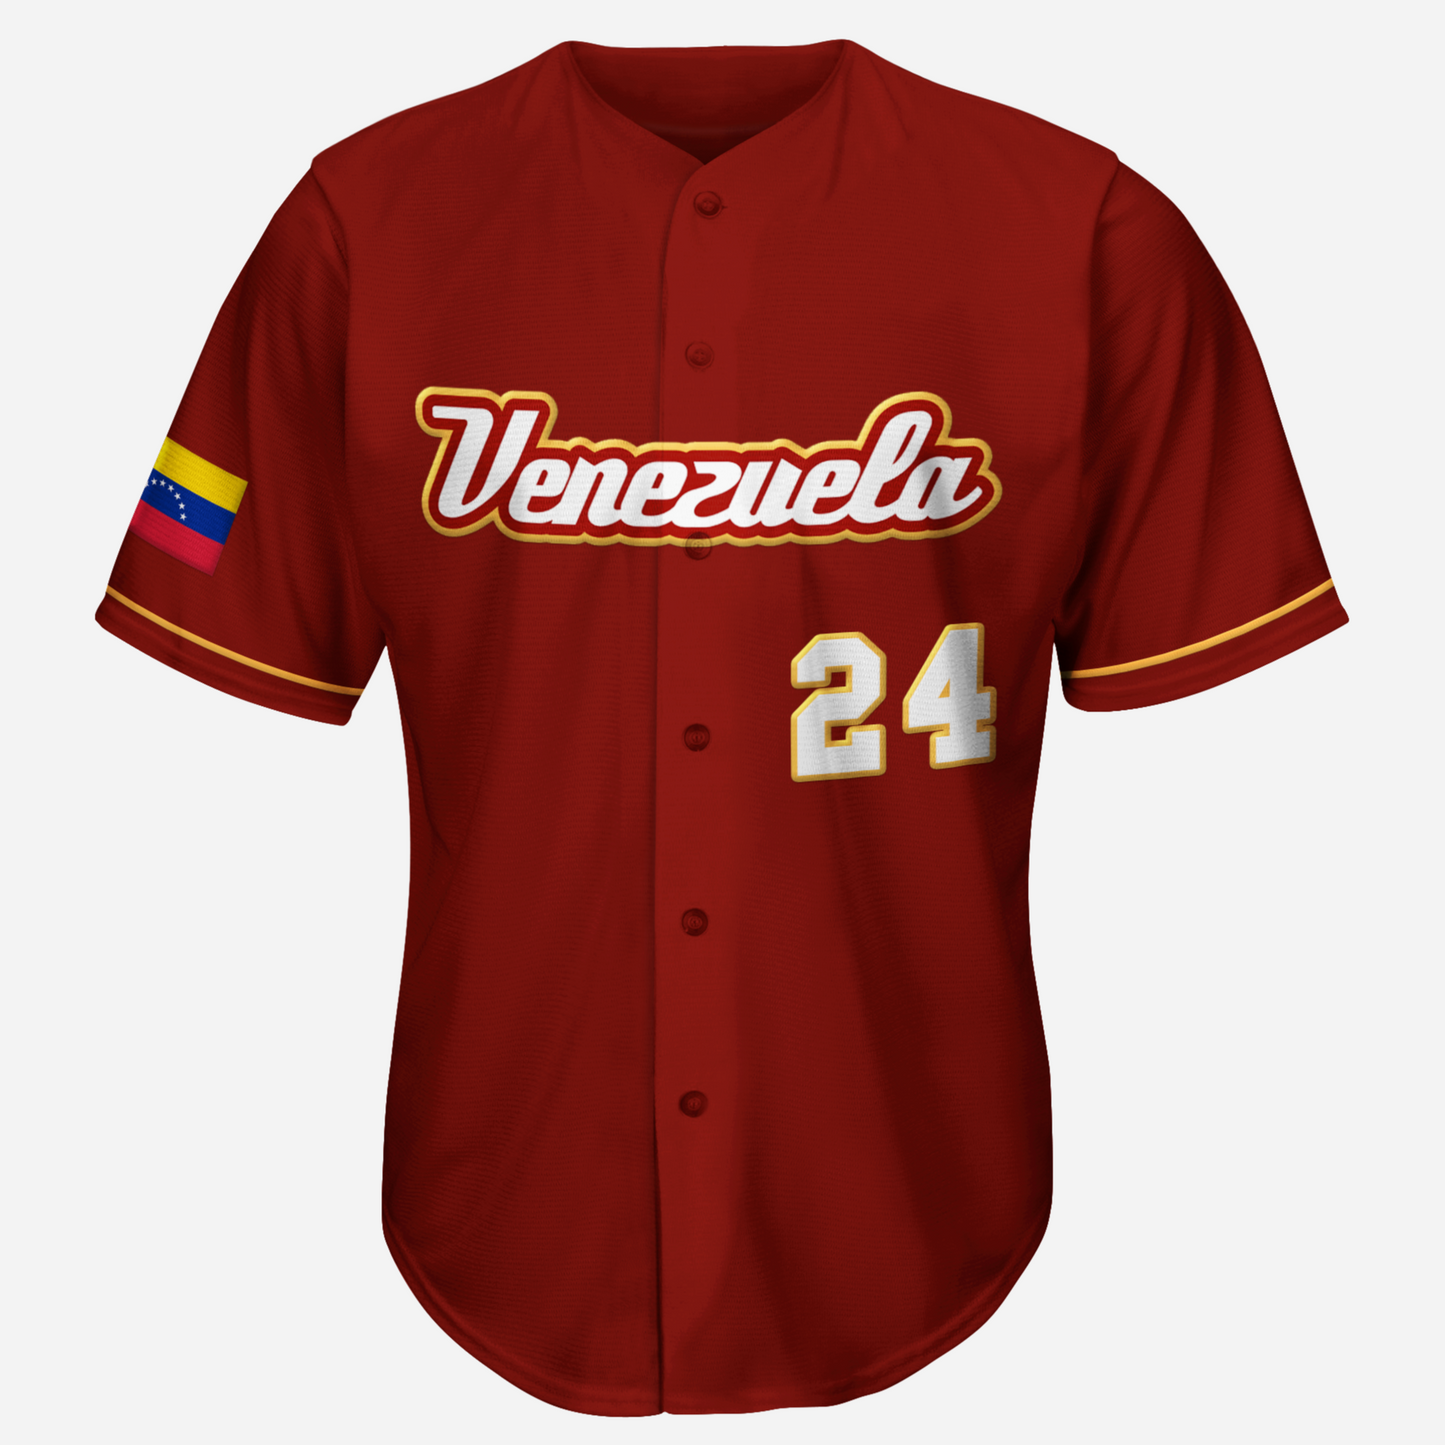  Parvii Personalized Venezuela Baseball Jersey, Camisa